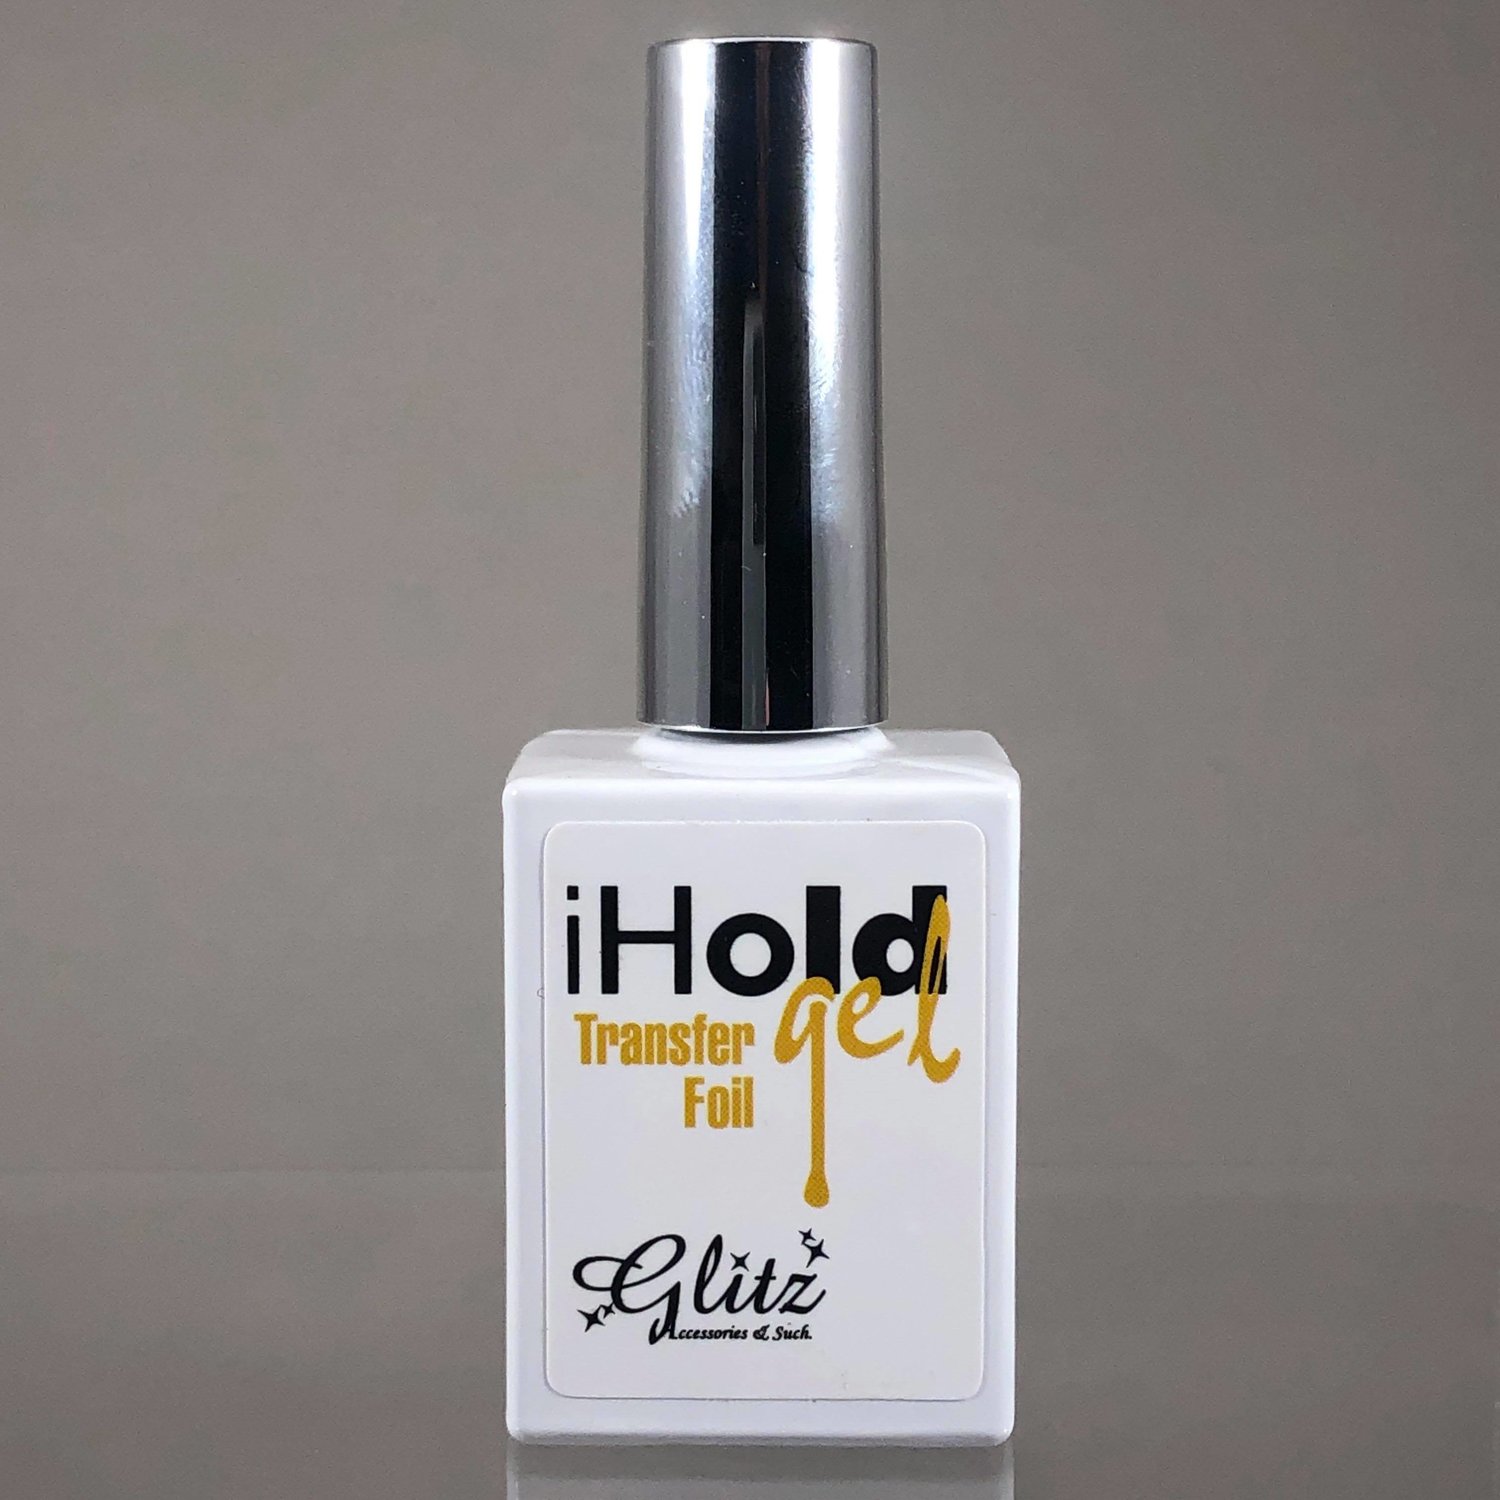 iHold - Transfer Foil Gel — Glitz Accessories & Such.